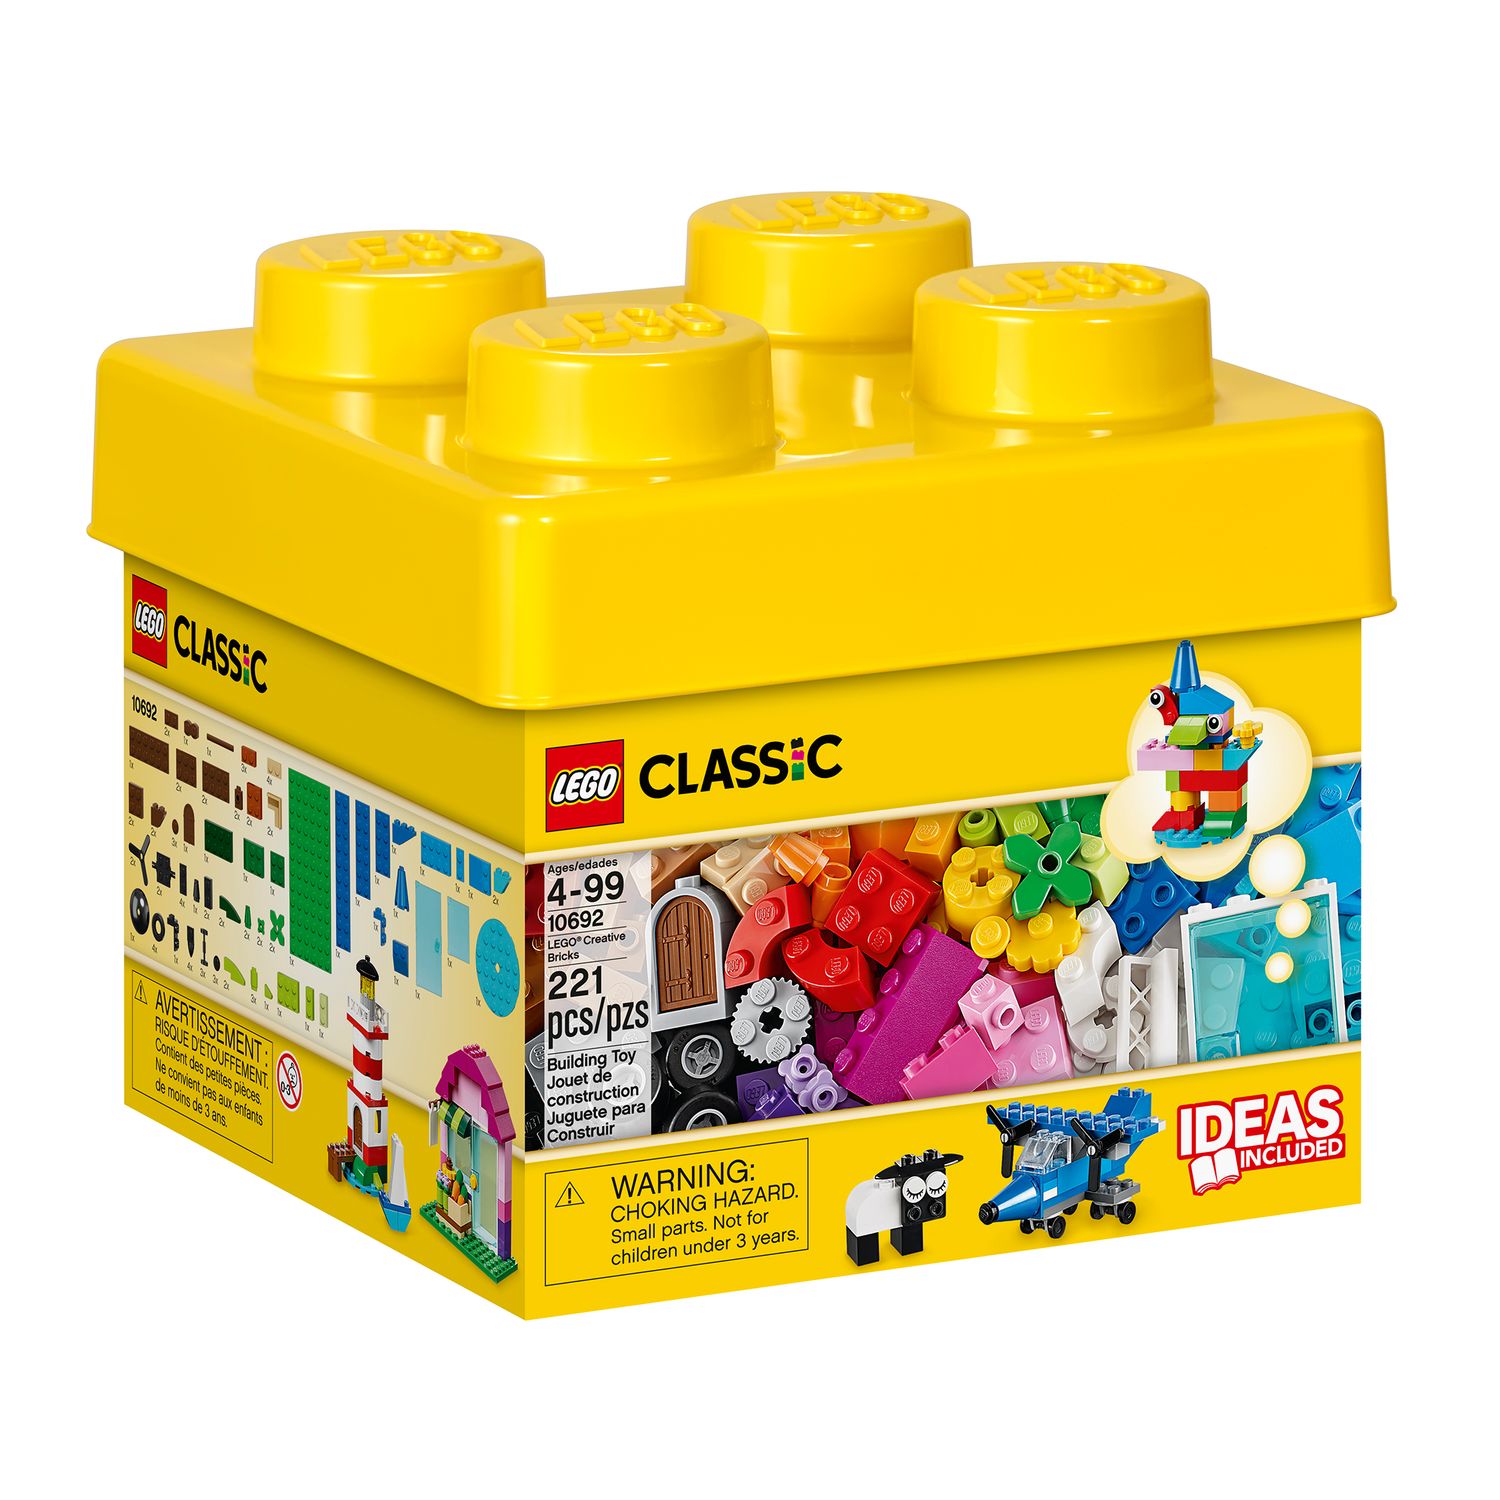 all lego classic sets